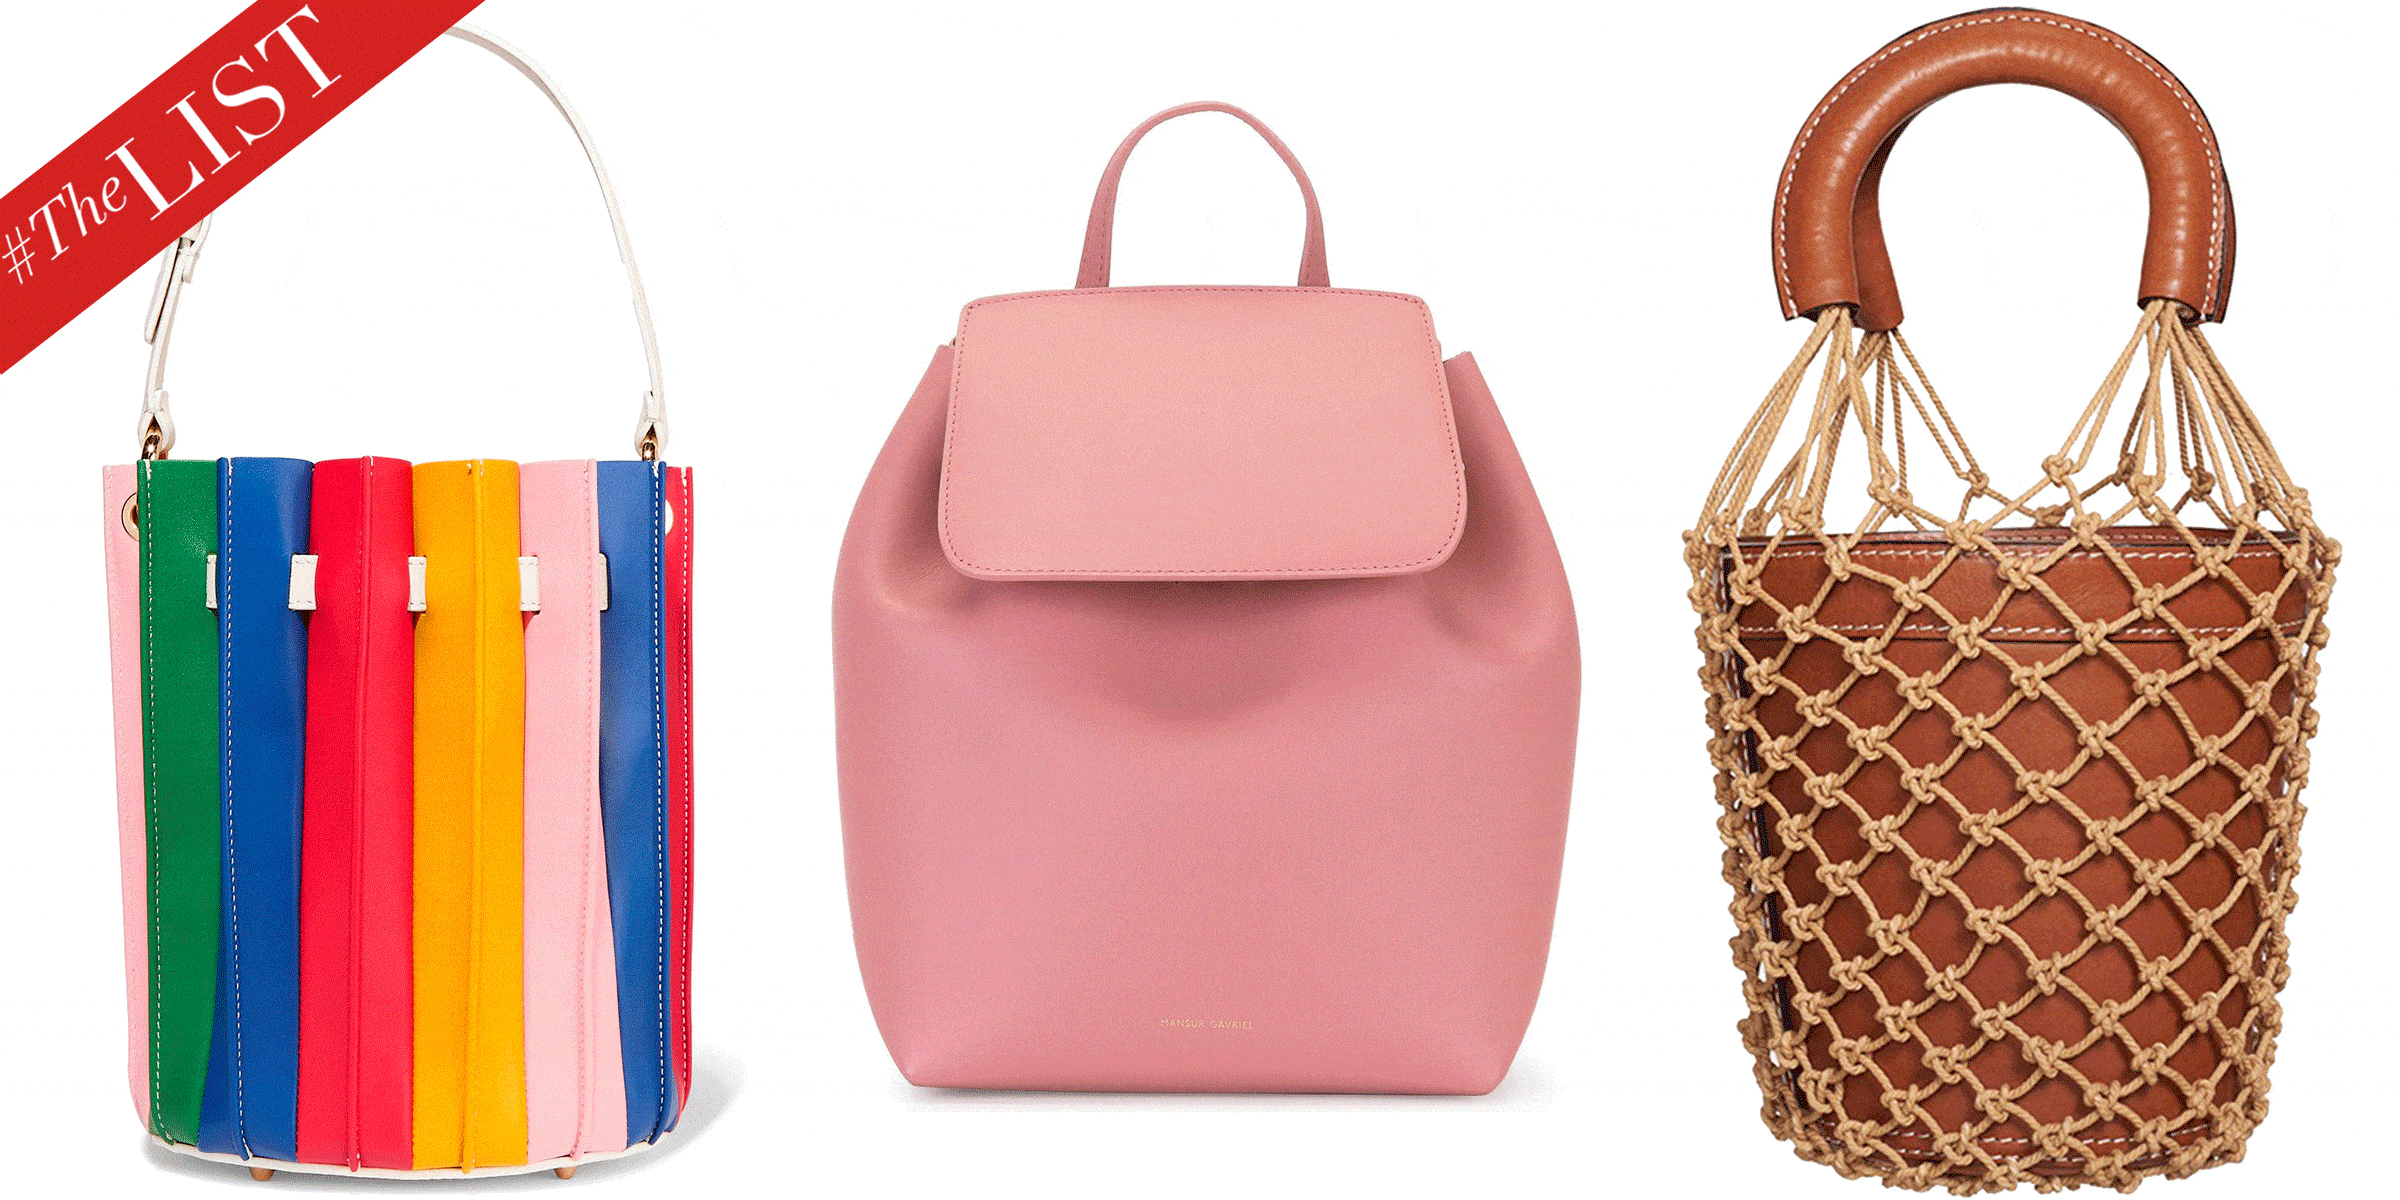 Summer Bags To Buy Now - Summer Handbag Shopping Guide